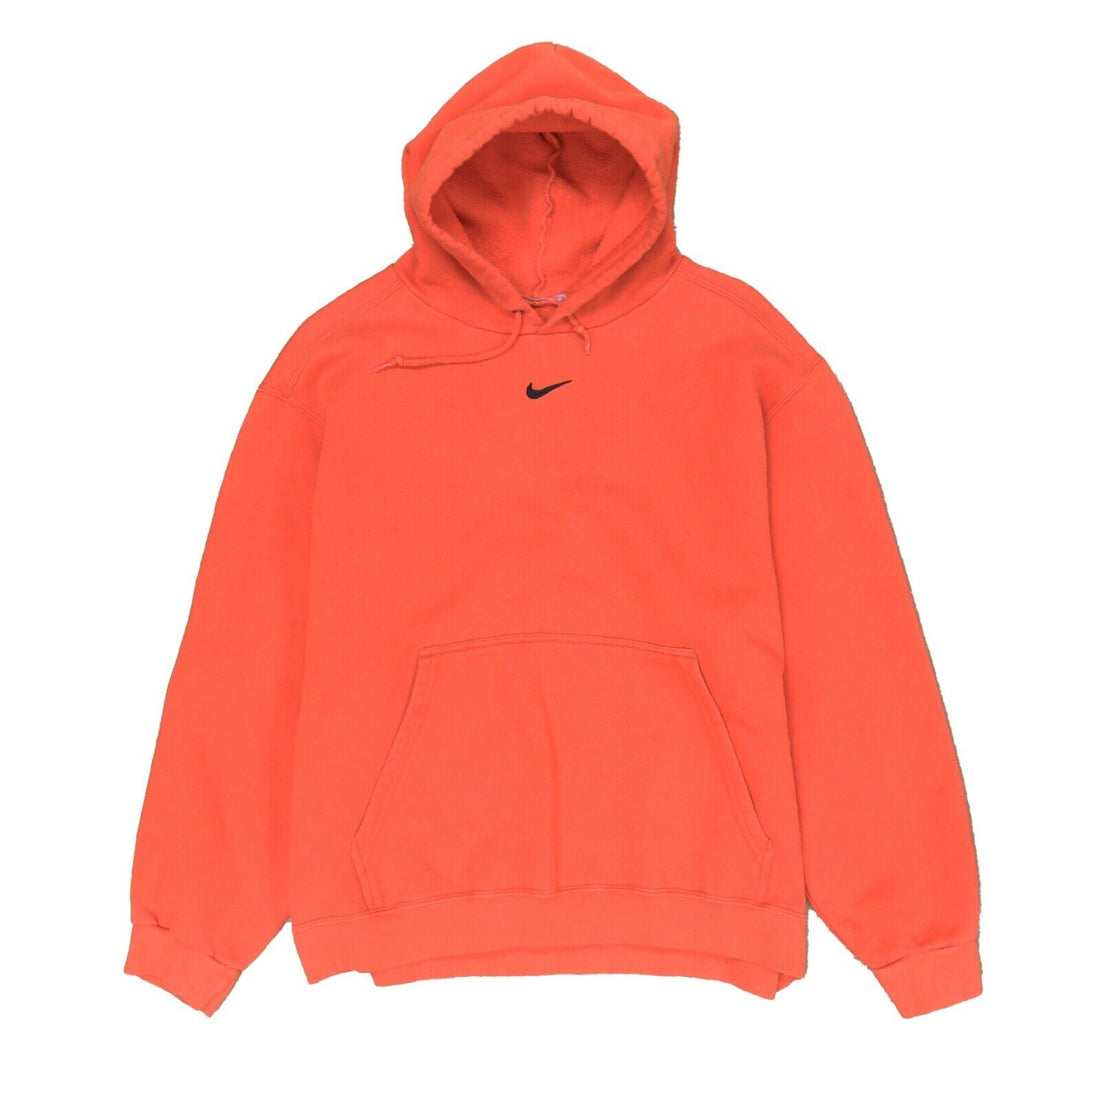 Vintage Nike Middle Swoosh Sweatshirt Hoodie Size XL Orange Embroidered